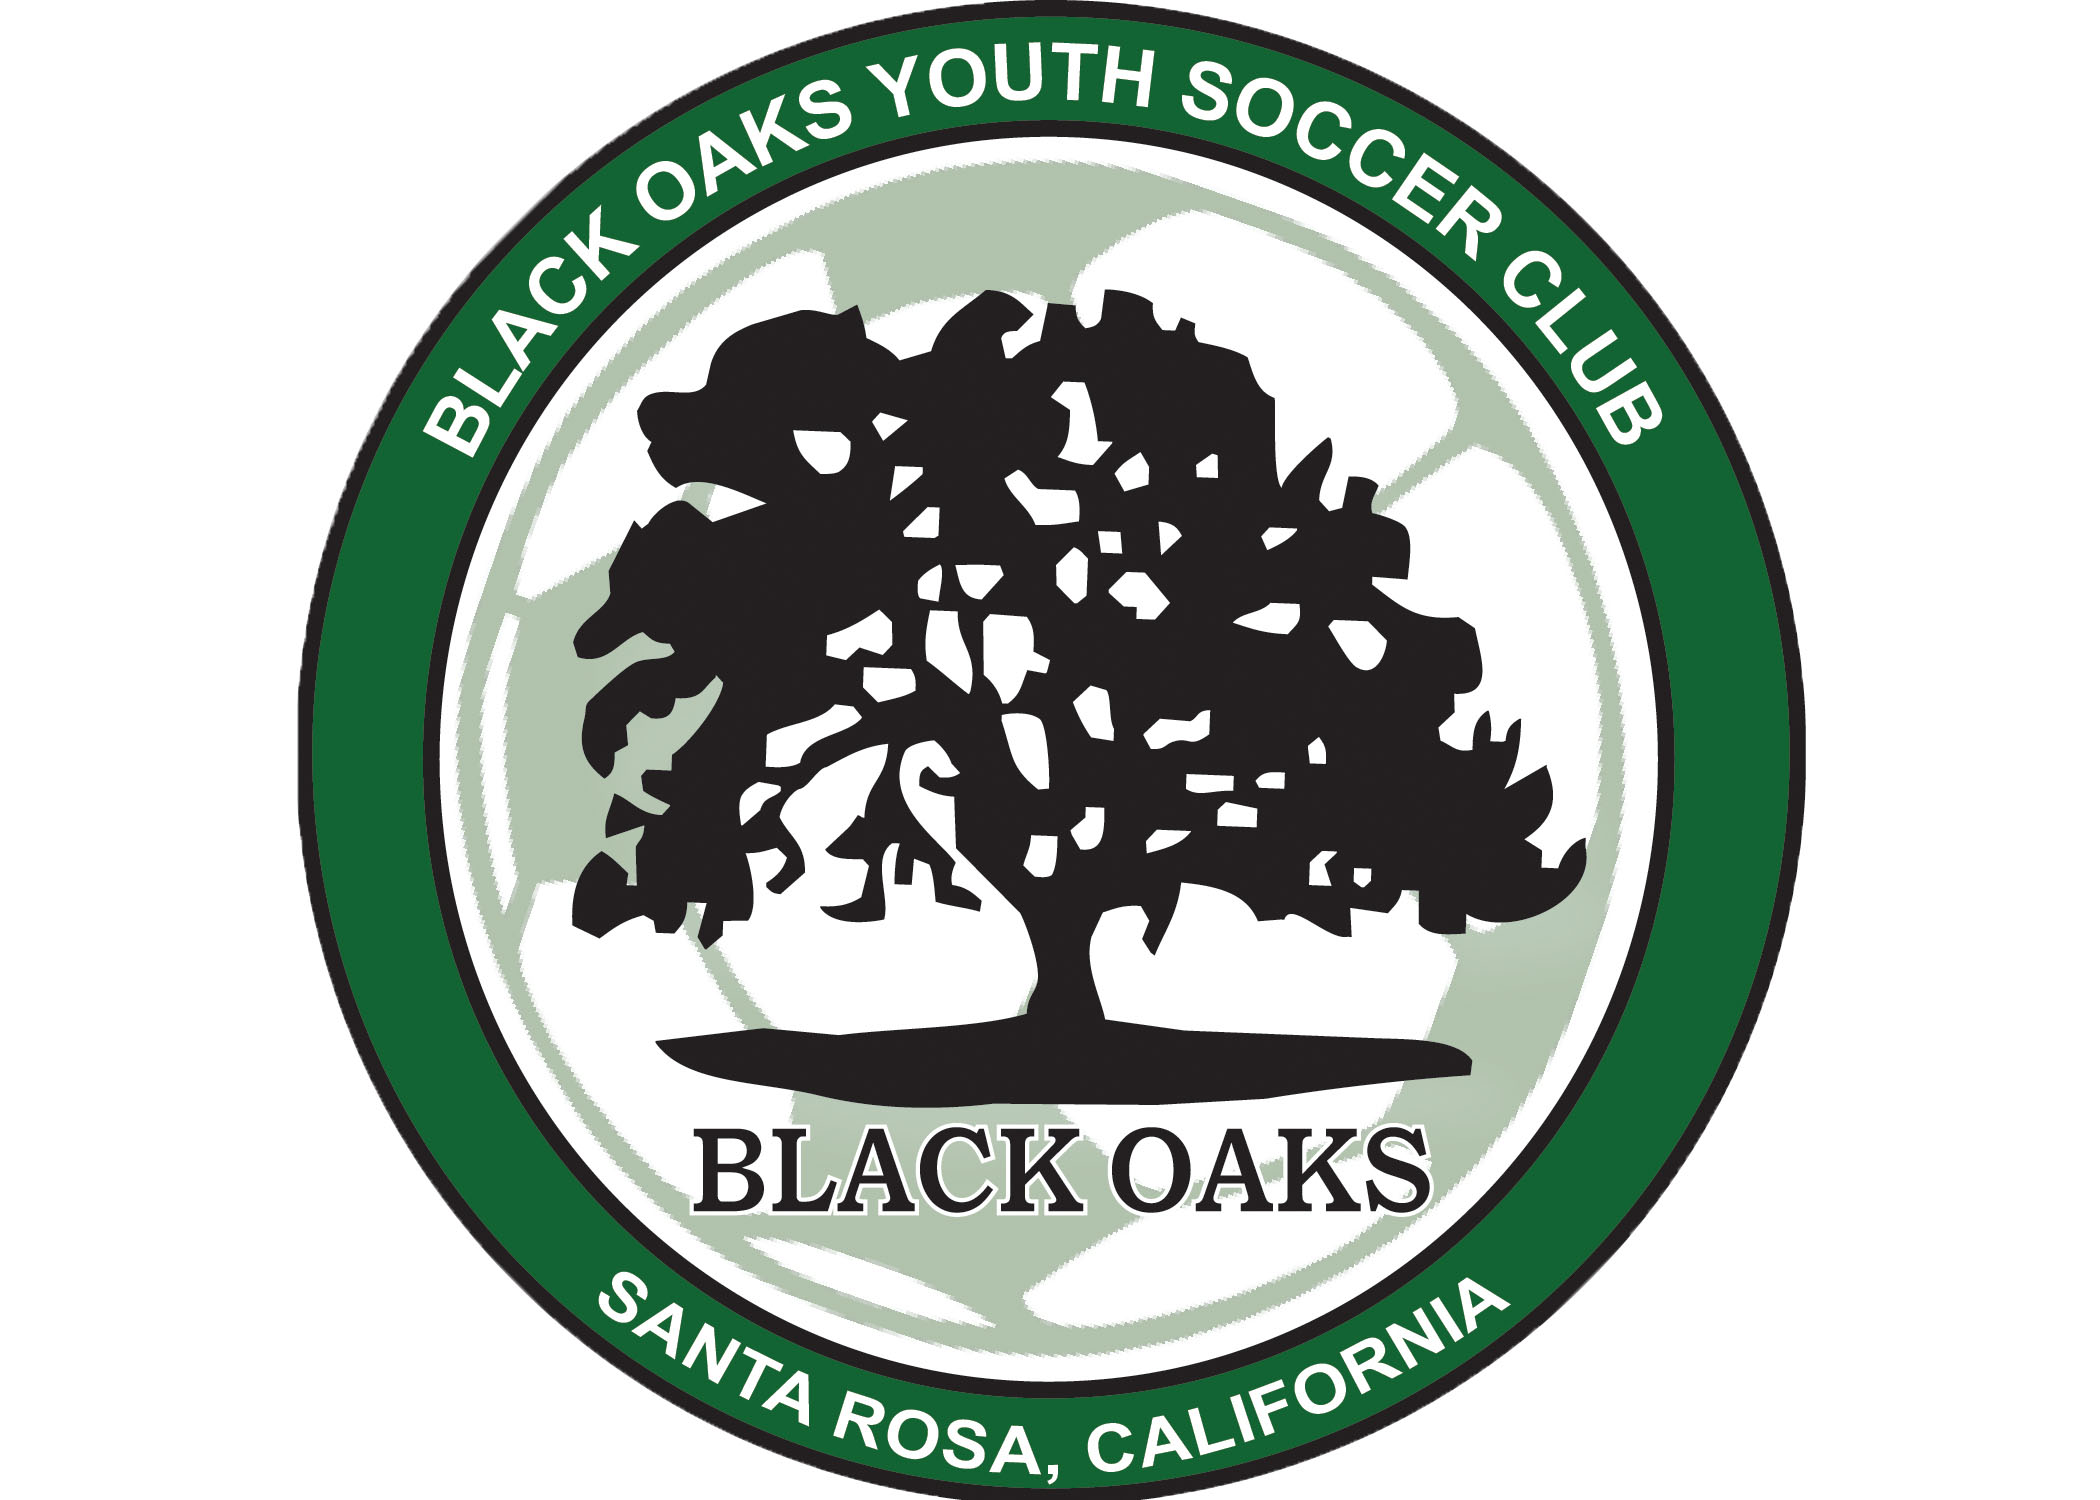 Black Oaks Youth Soccer Club team badge